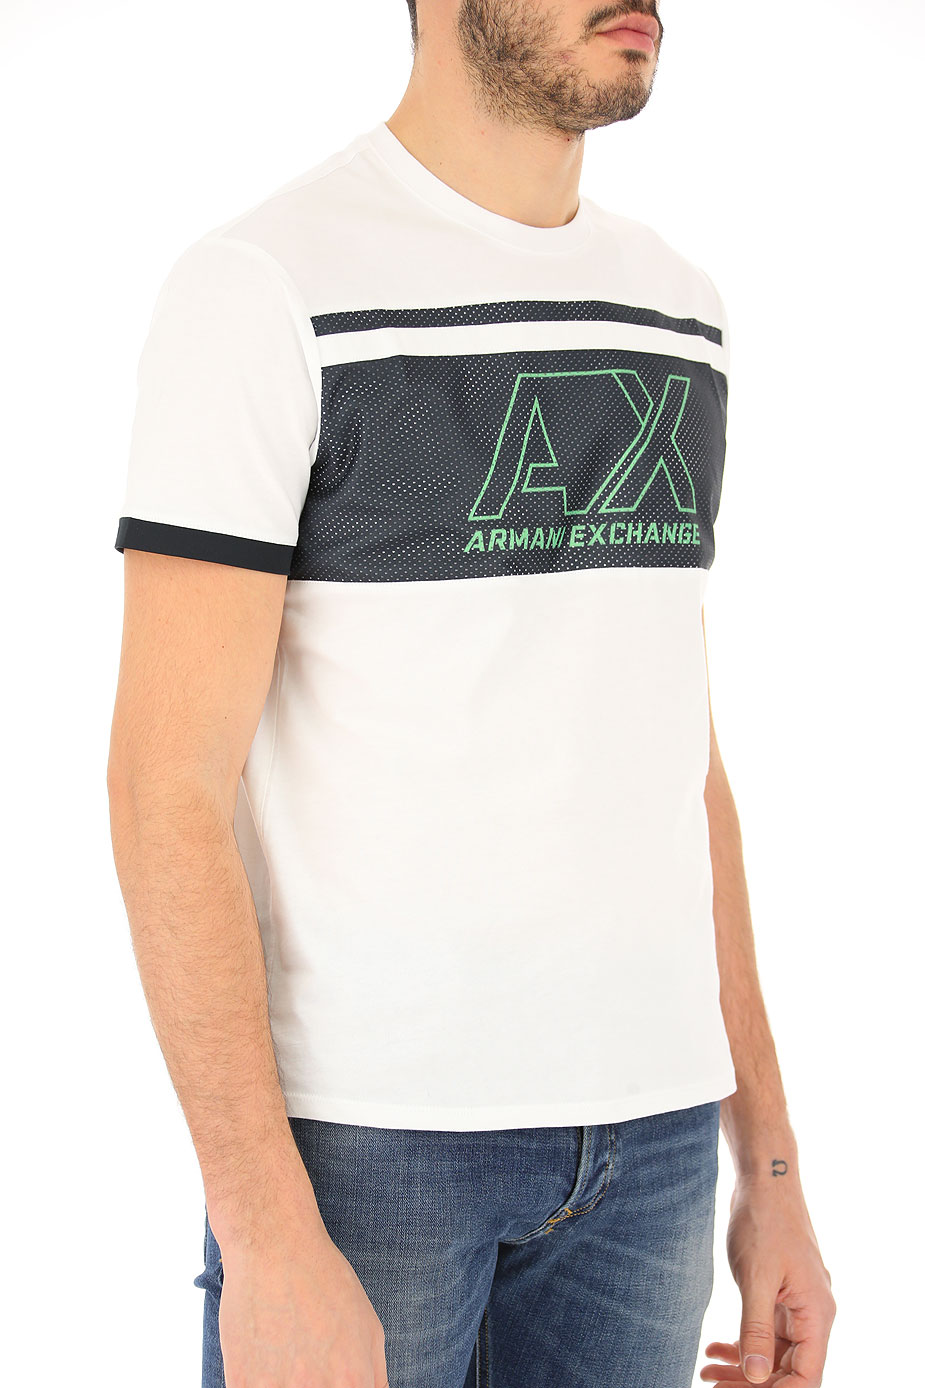 Mens Clothing Armani Exchange, Style code: 3gzt88_a1-zj3az-1100